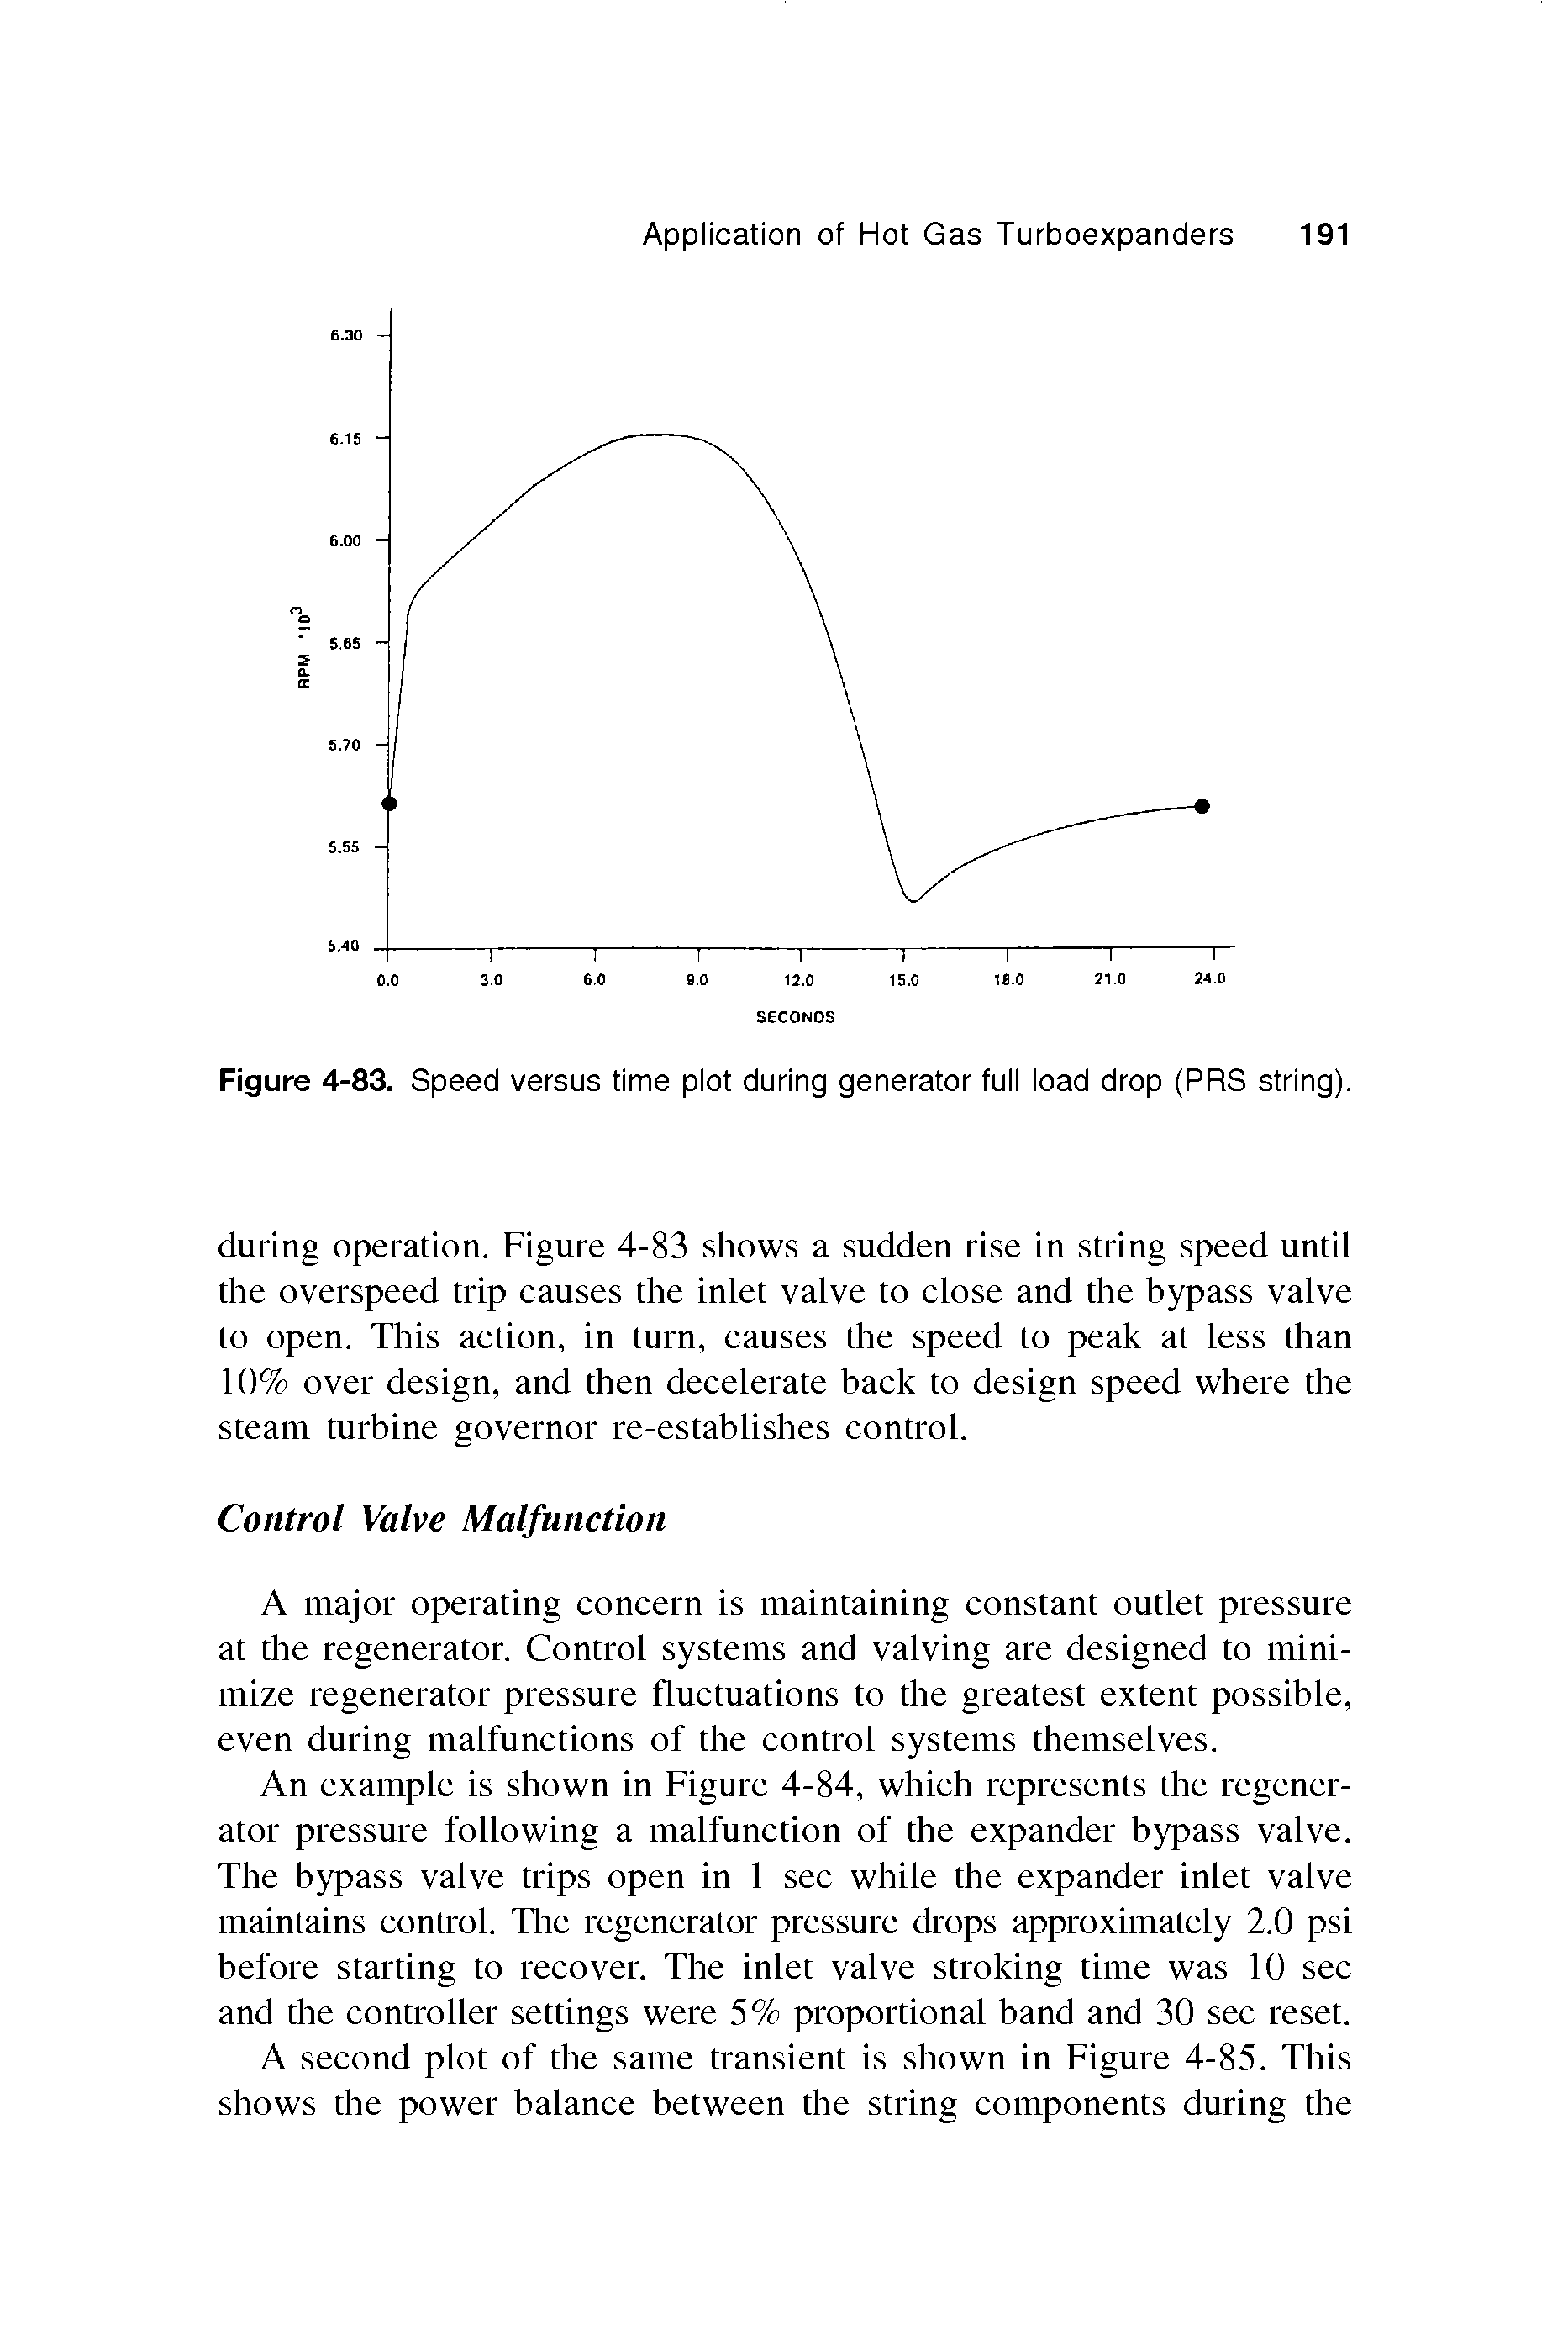 Figure 4-83. Speed versus time plot during generator full load drop (PRS string).